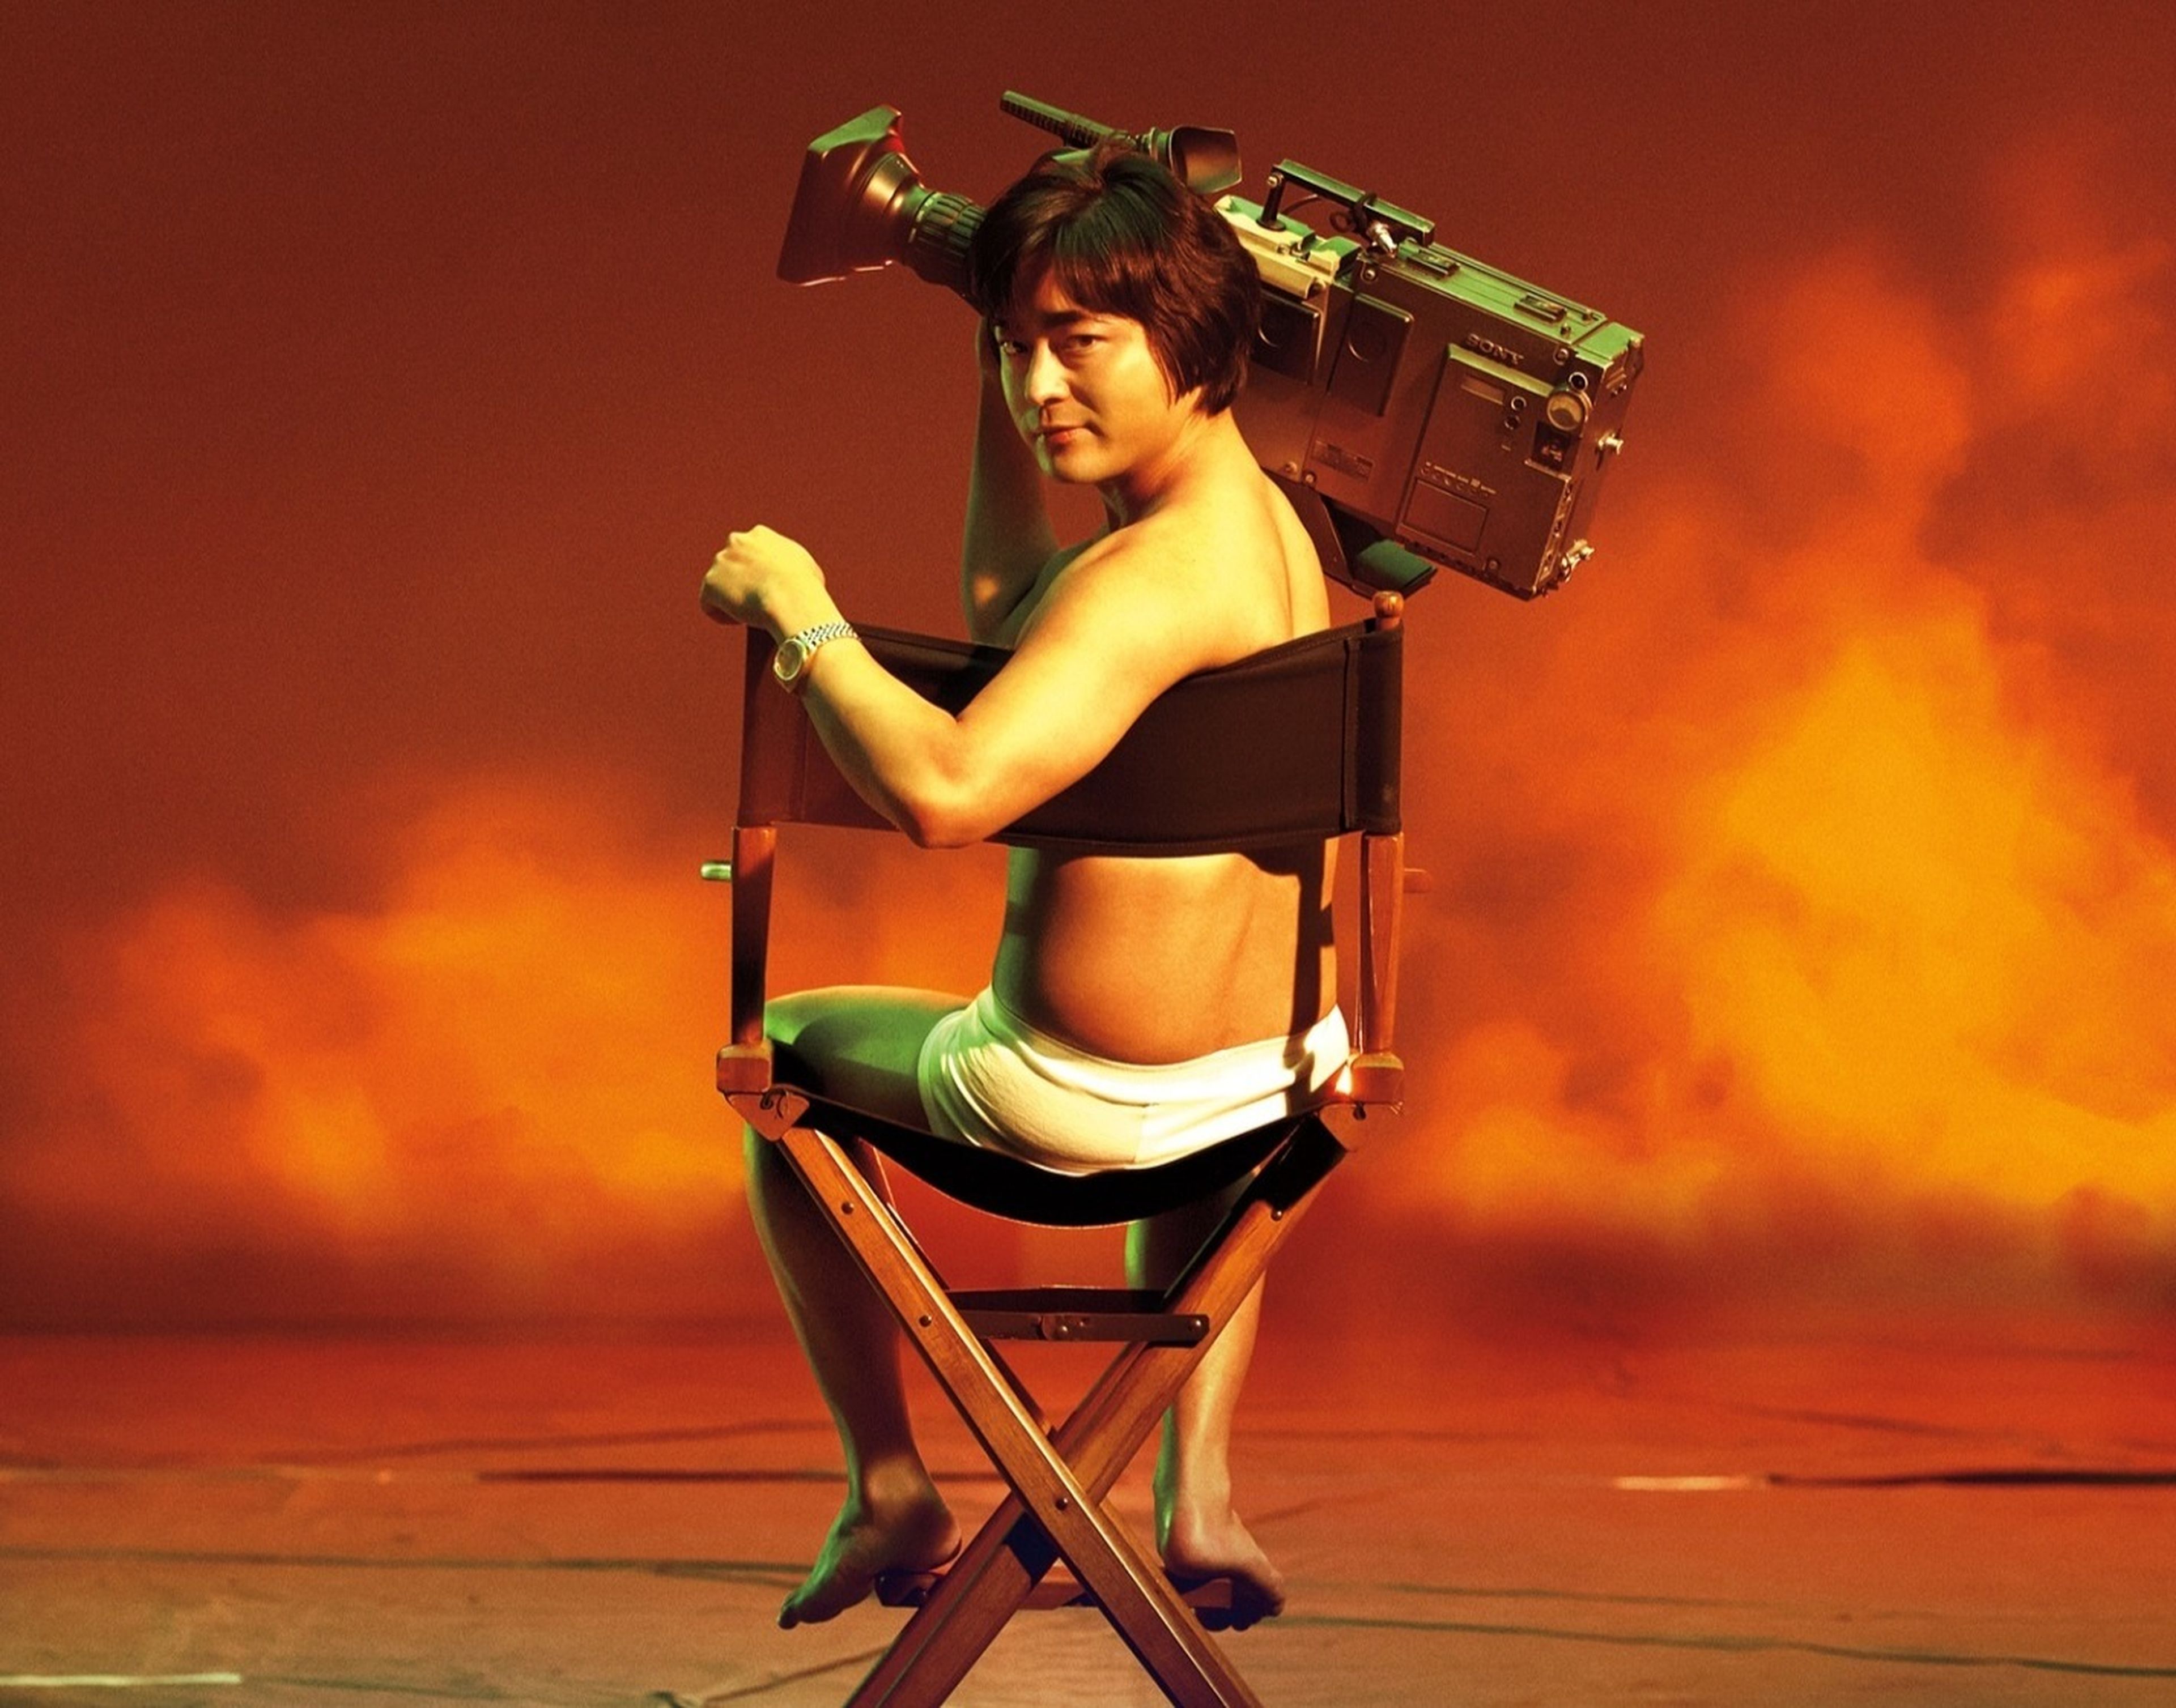 The Naked Director Toru Muranishi